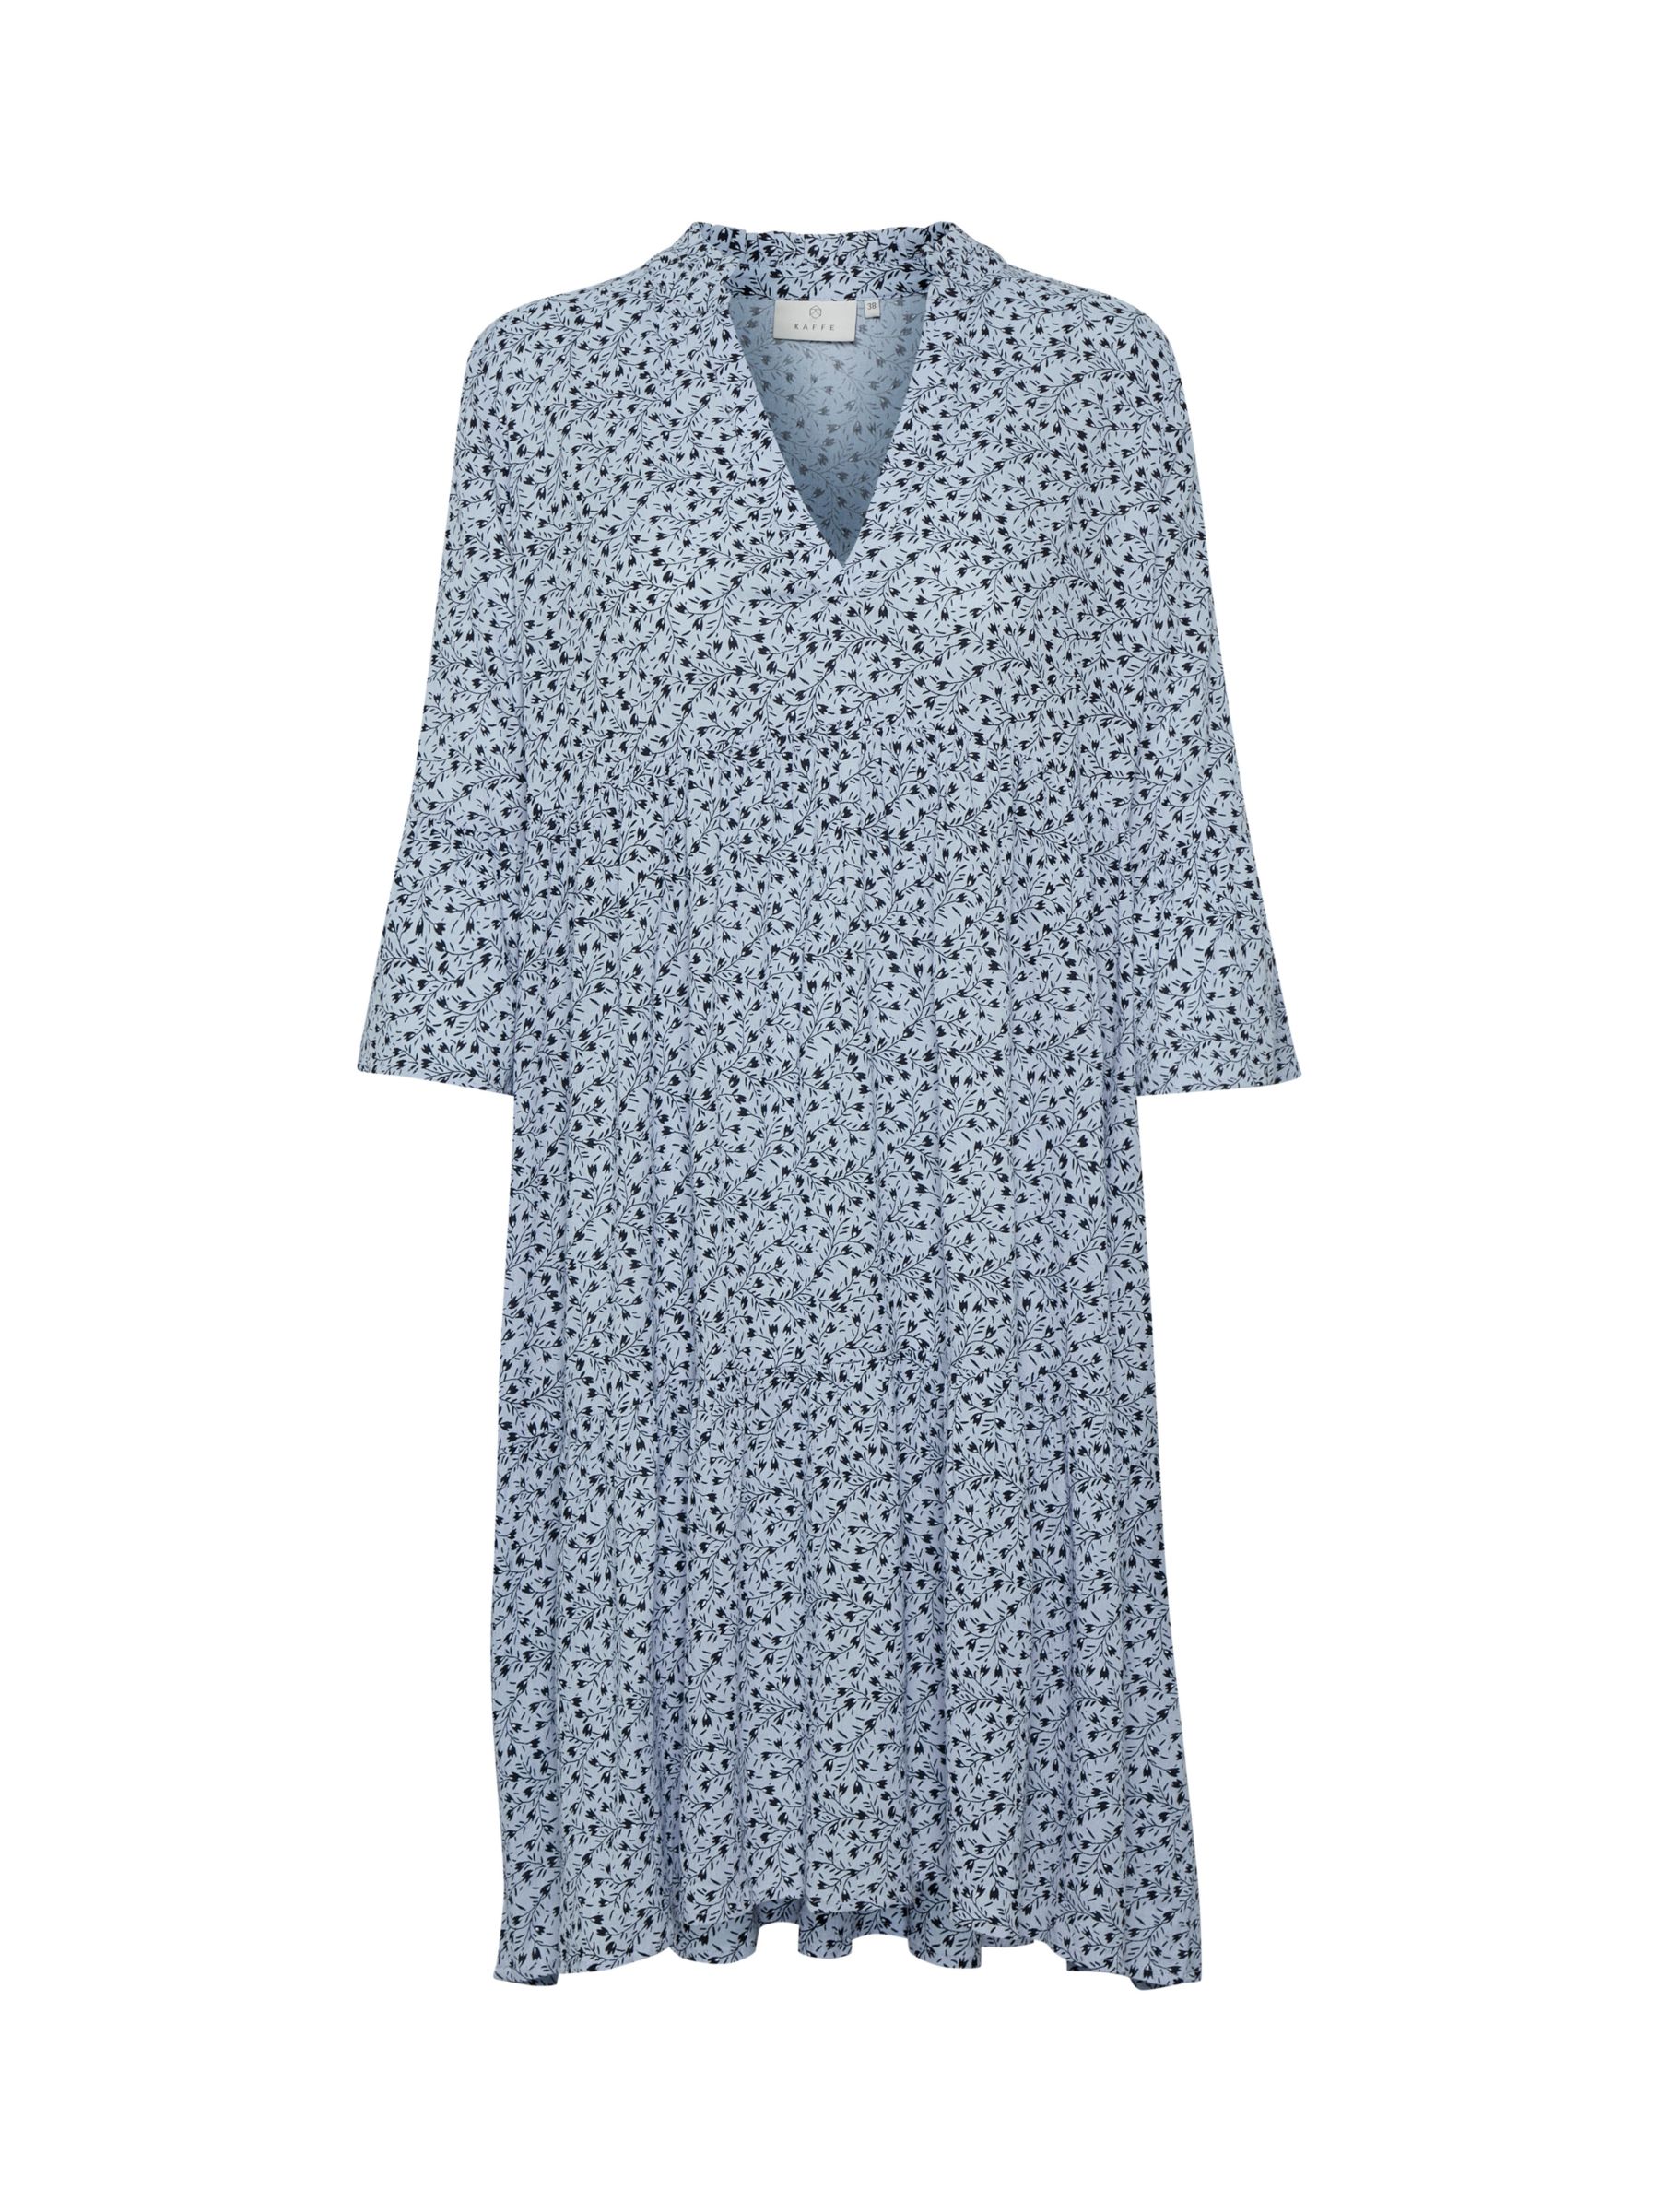 KAFFE Berna Ecovero Knee-Length Loose Fit Dress, Chambray Blue, 8